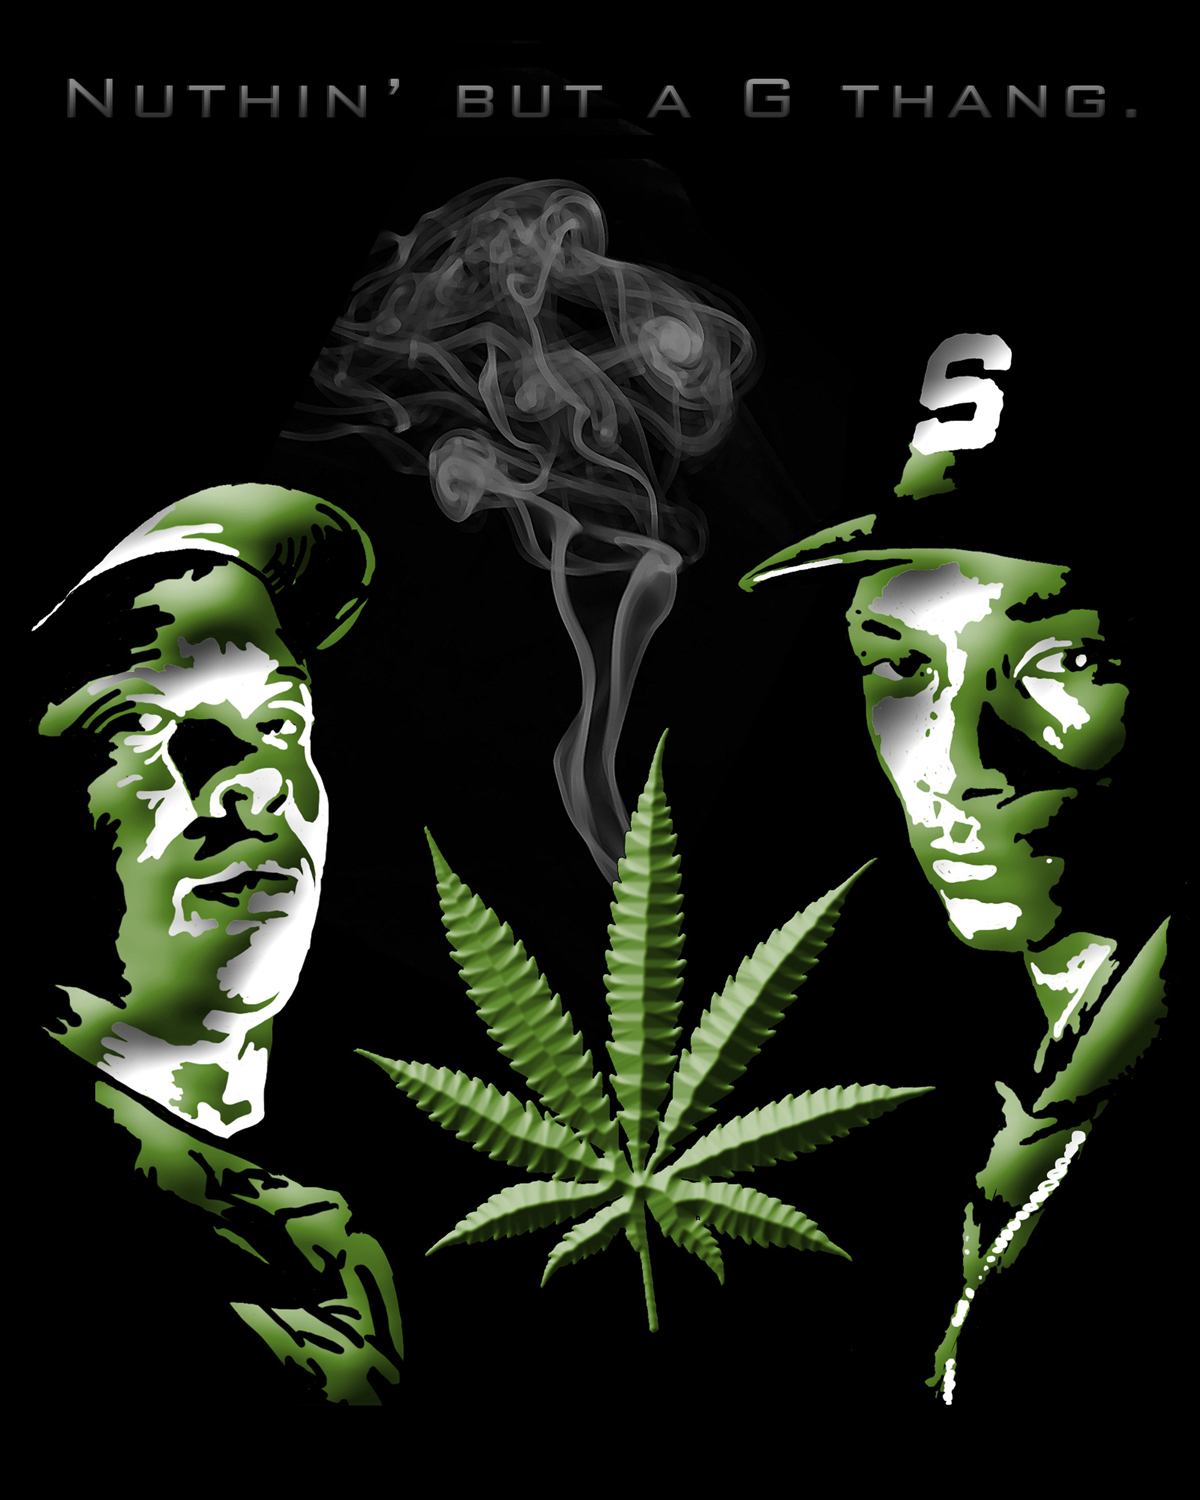 Snoop Dogg Image And Dre G Thang HD Wallpaper